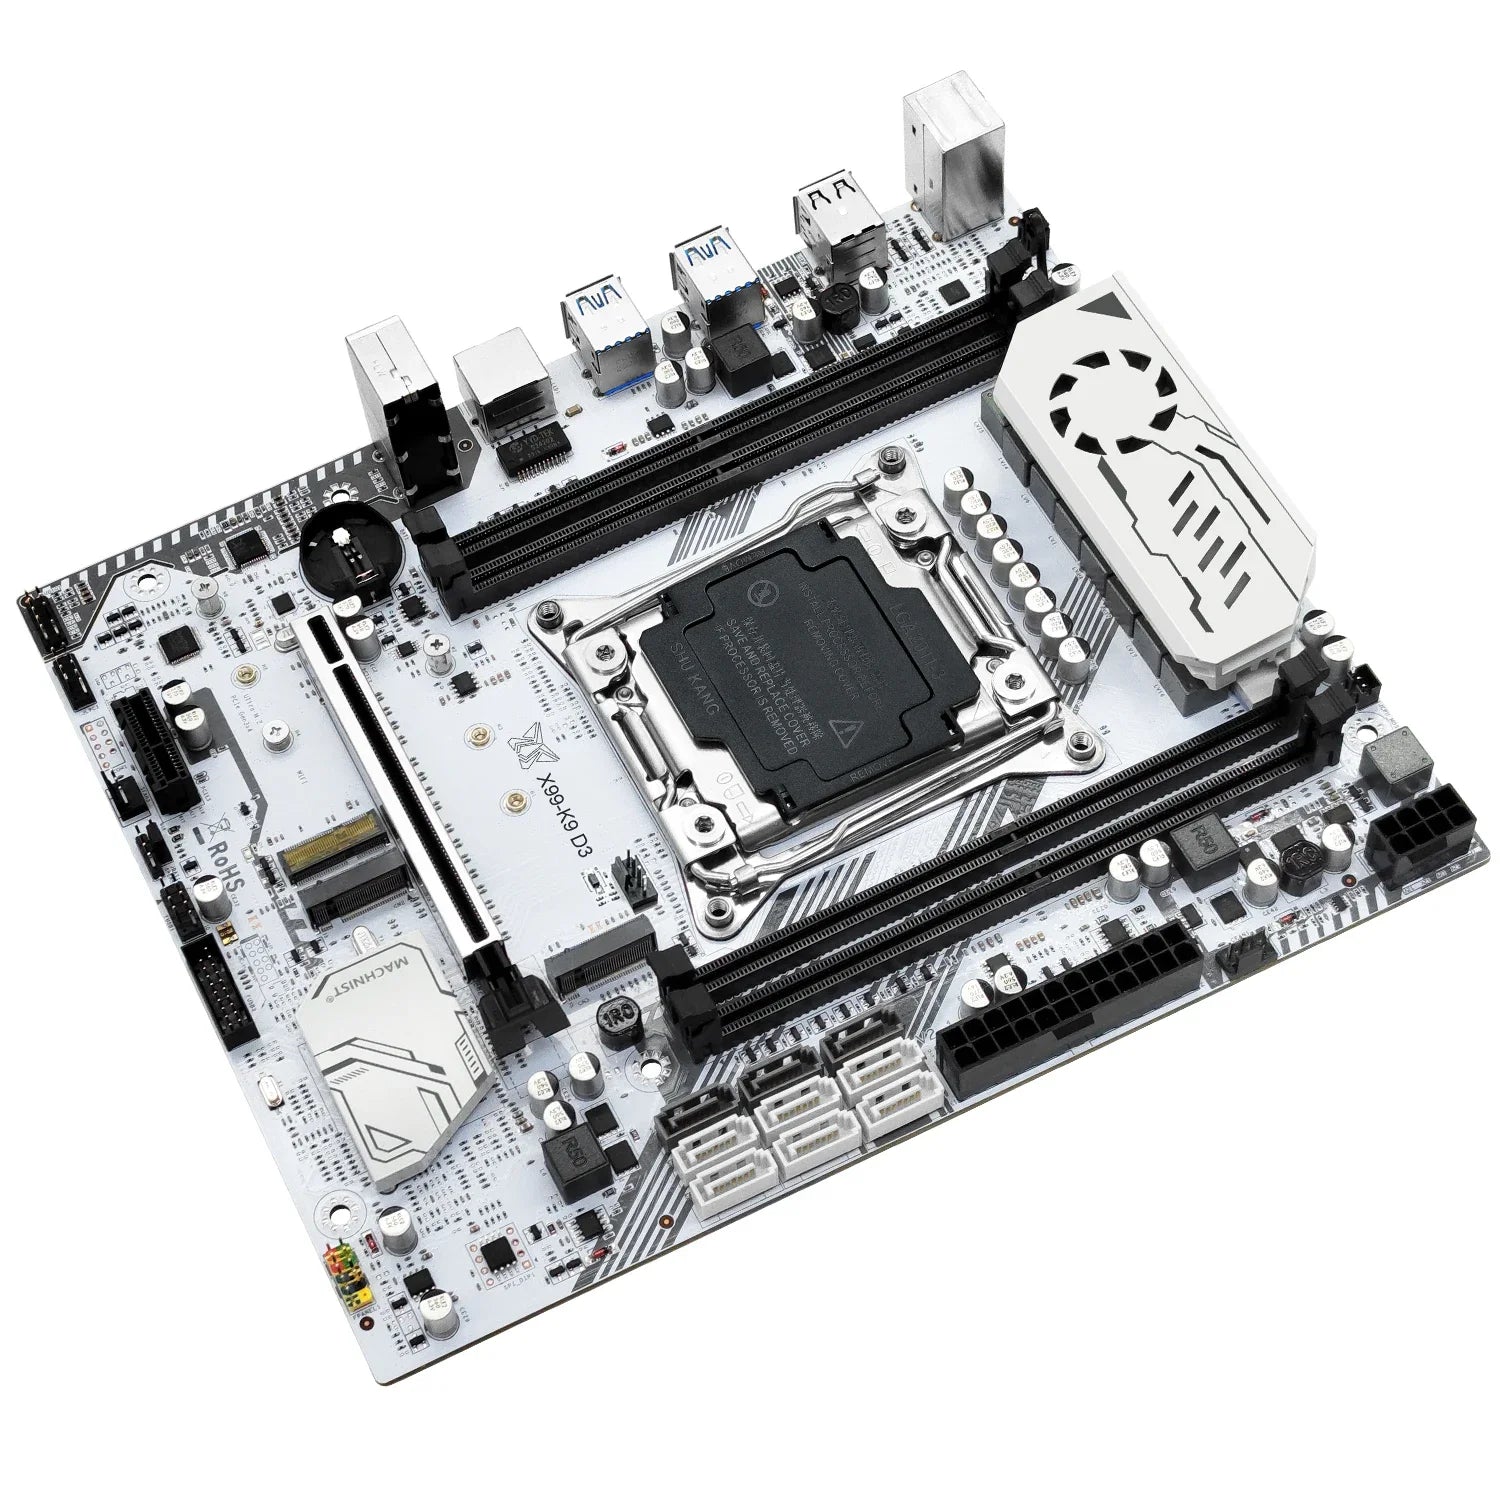 Machinist LGA 2011-3 Intel Xeon E5 2666 V3 Desktop Motherboard Set